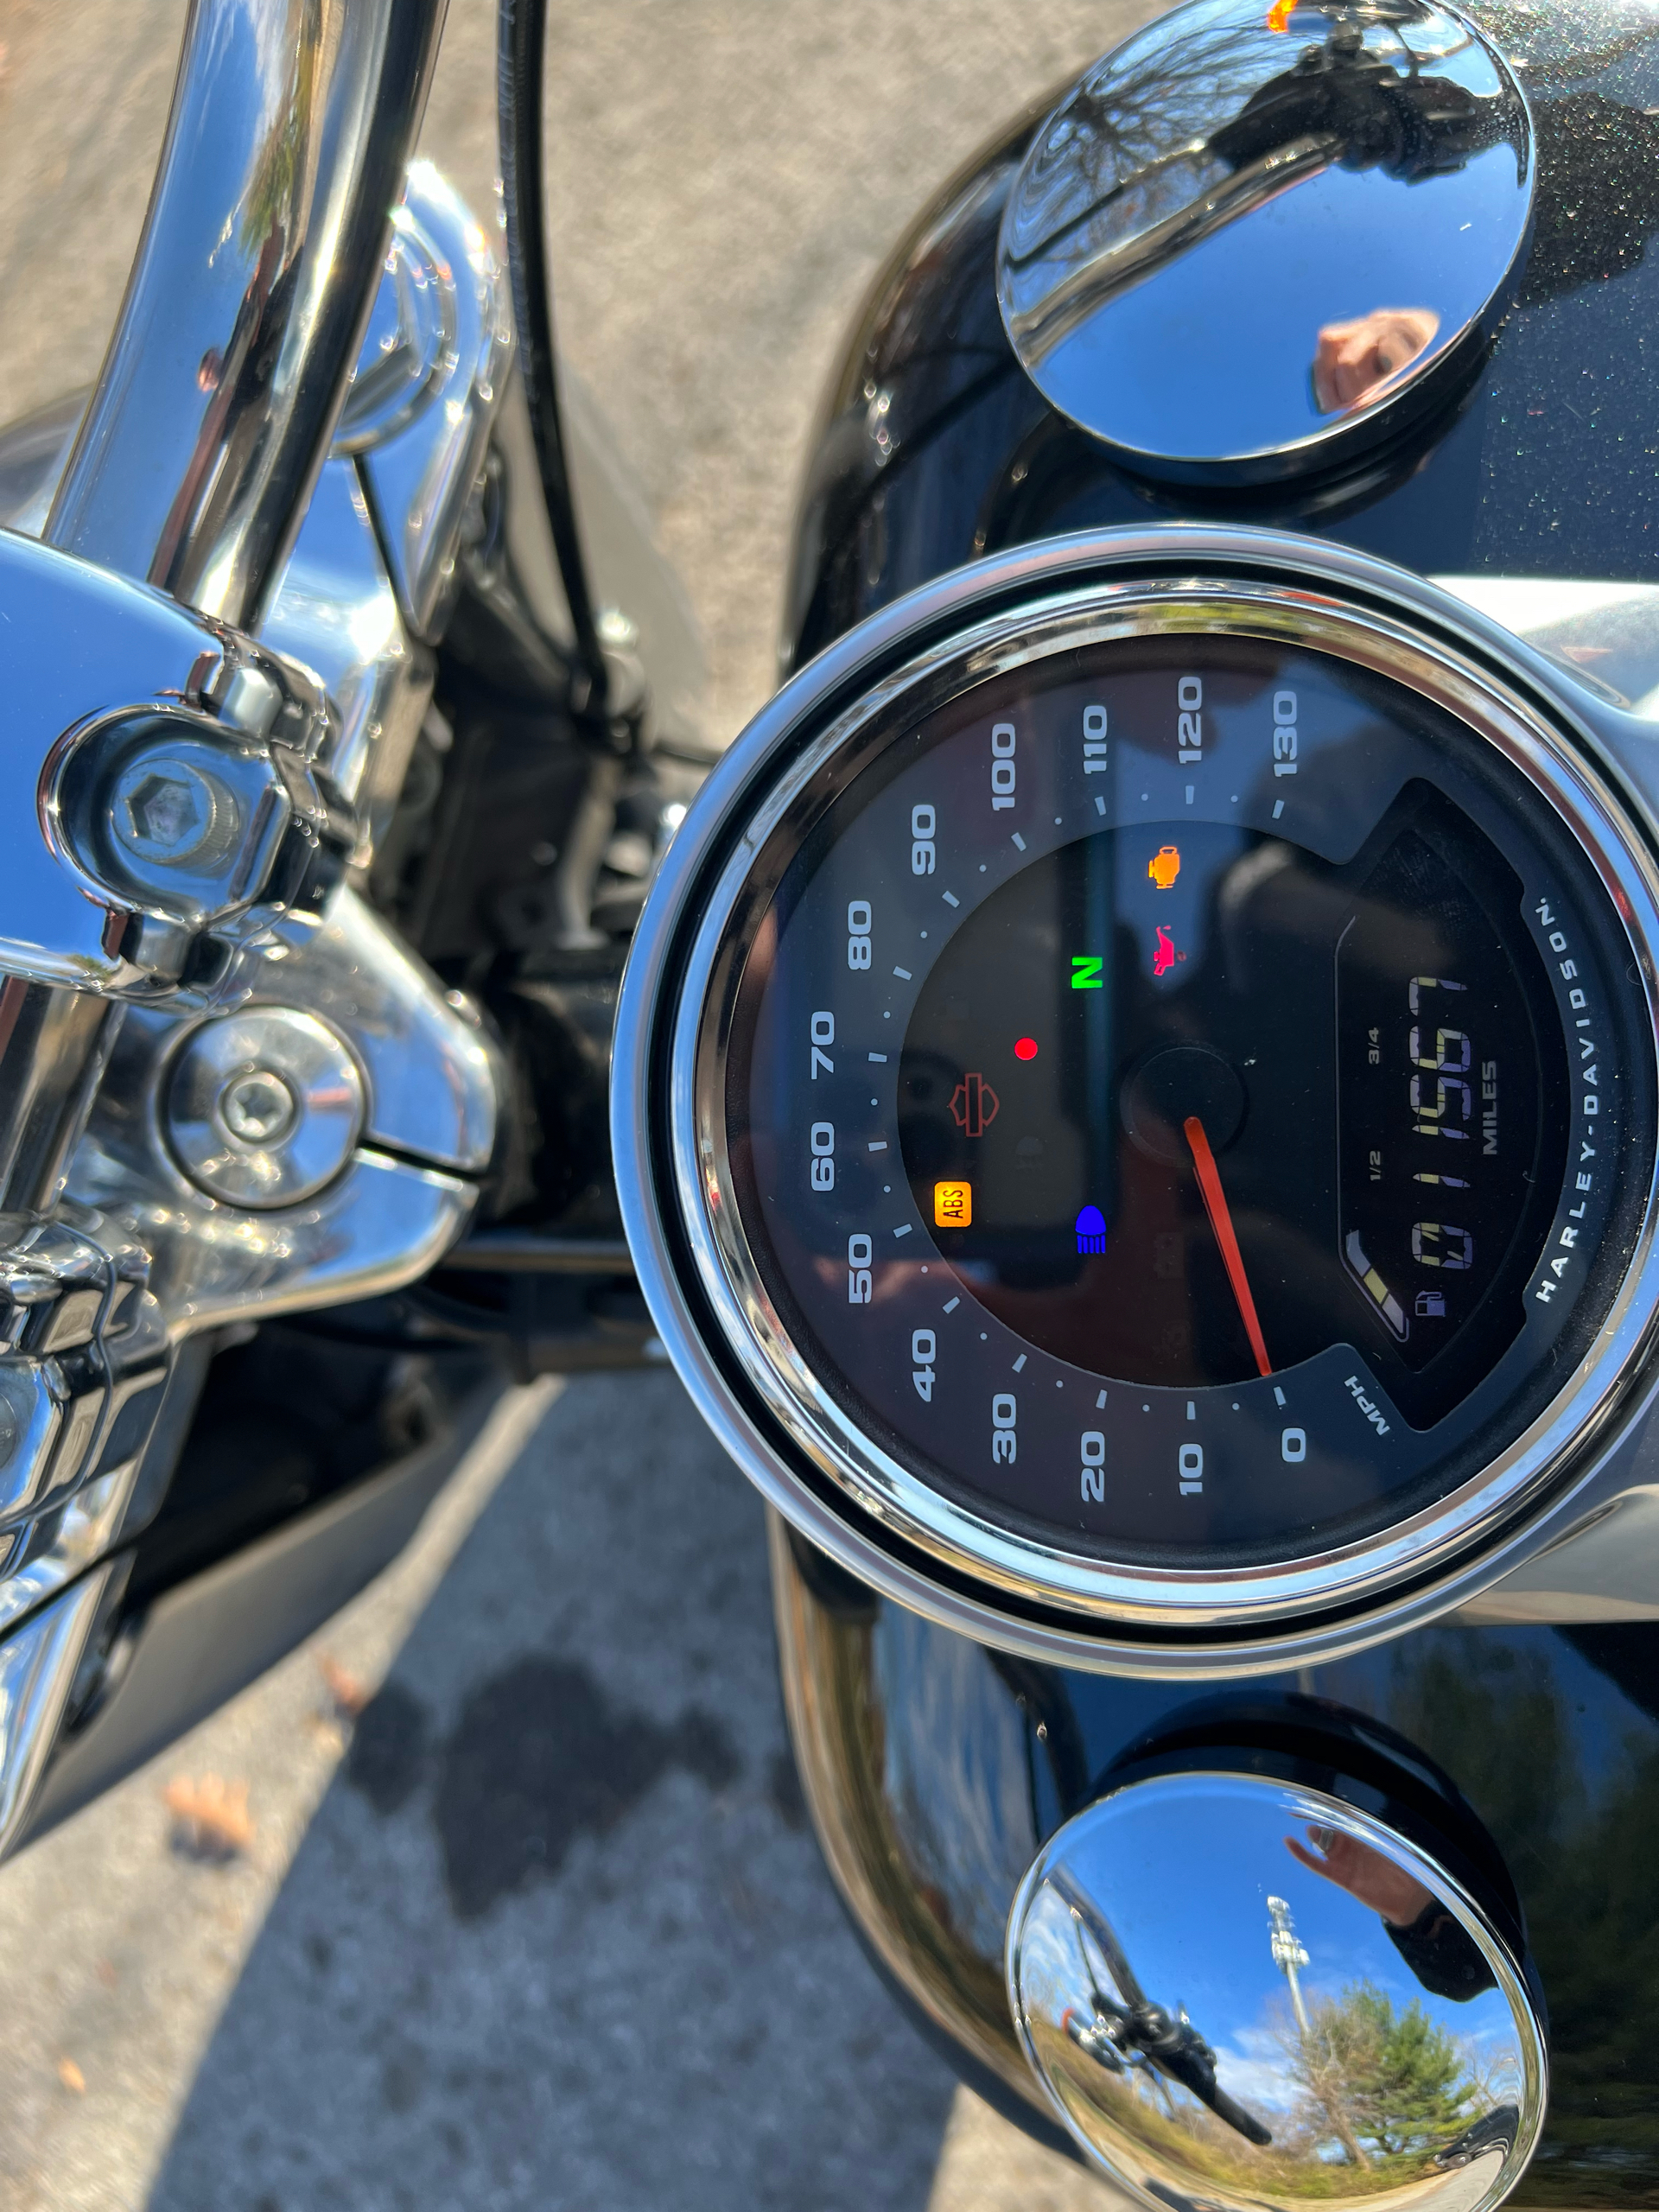 2018 Harley-Davidson Fat Boy® 114 in Franklin, Tennessee - Photo 15